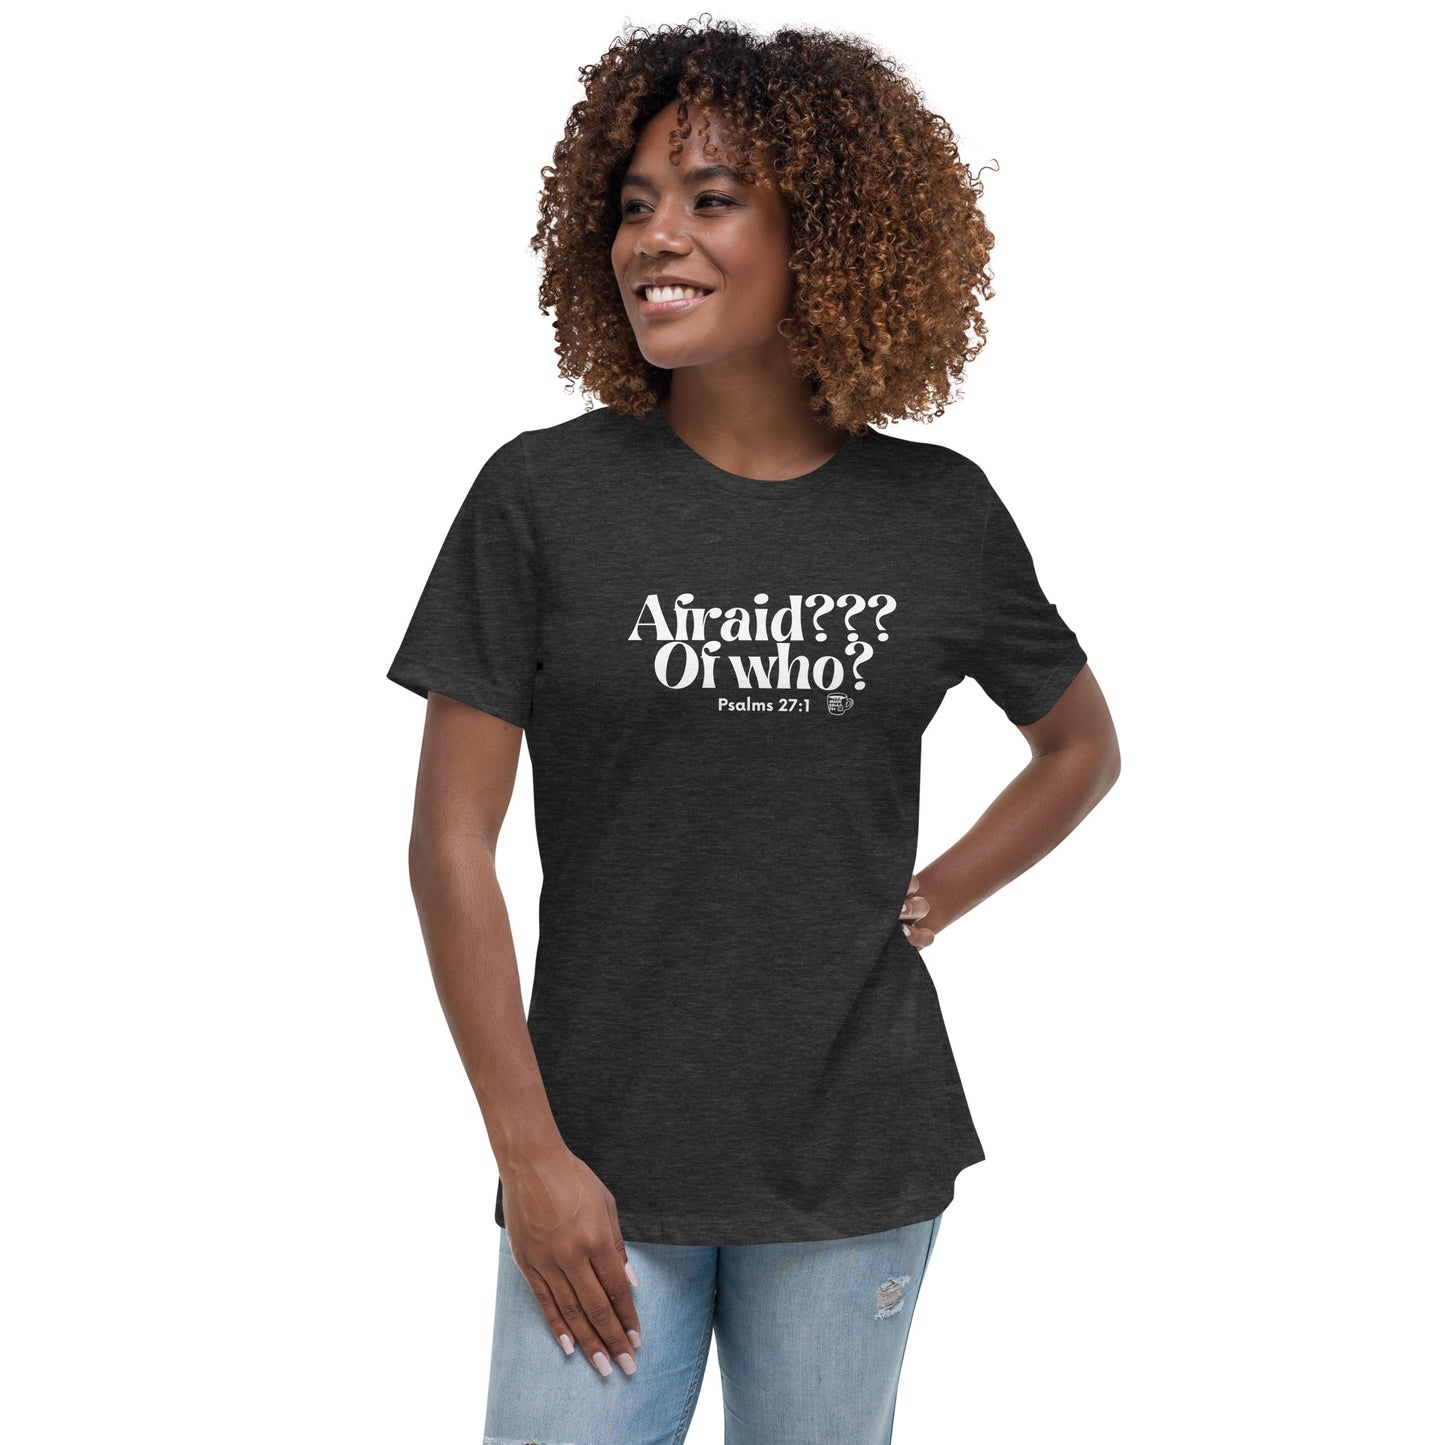 Urban Bible Tea: Afraid??? Of Who? Psalms 27:1 Women's Relaxed T-Shirt